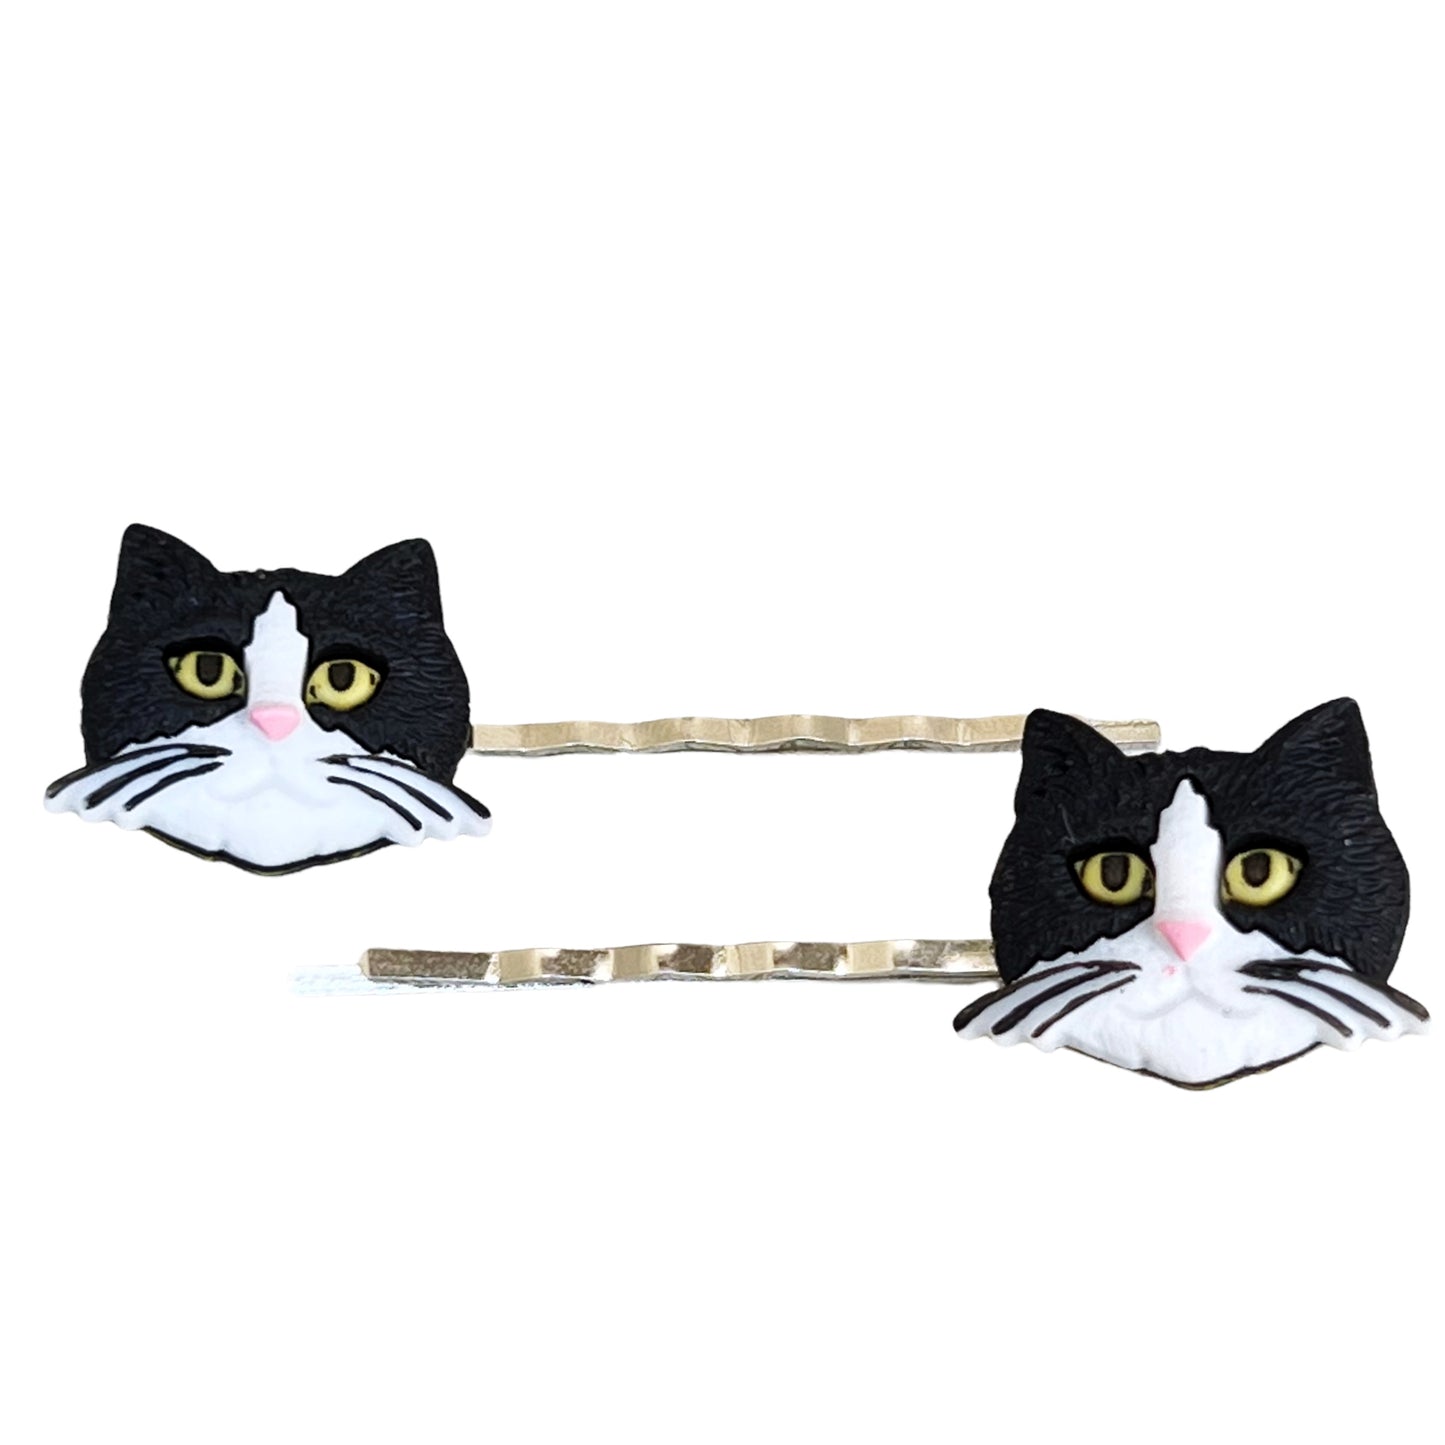 Black & White Cat Hair Pins - Feline-Inspired Accessories